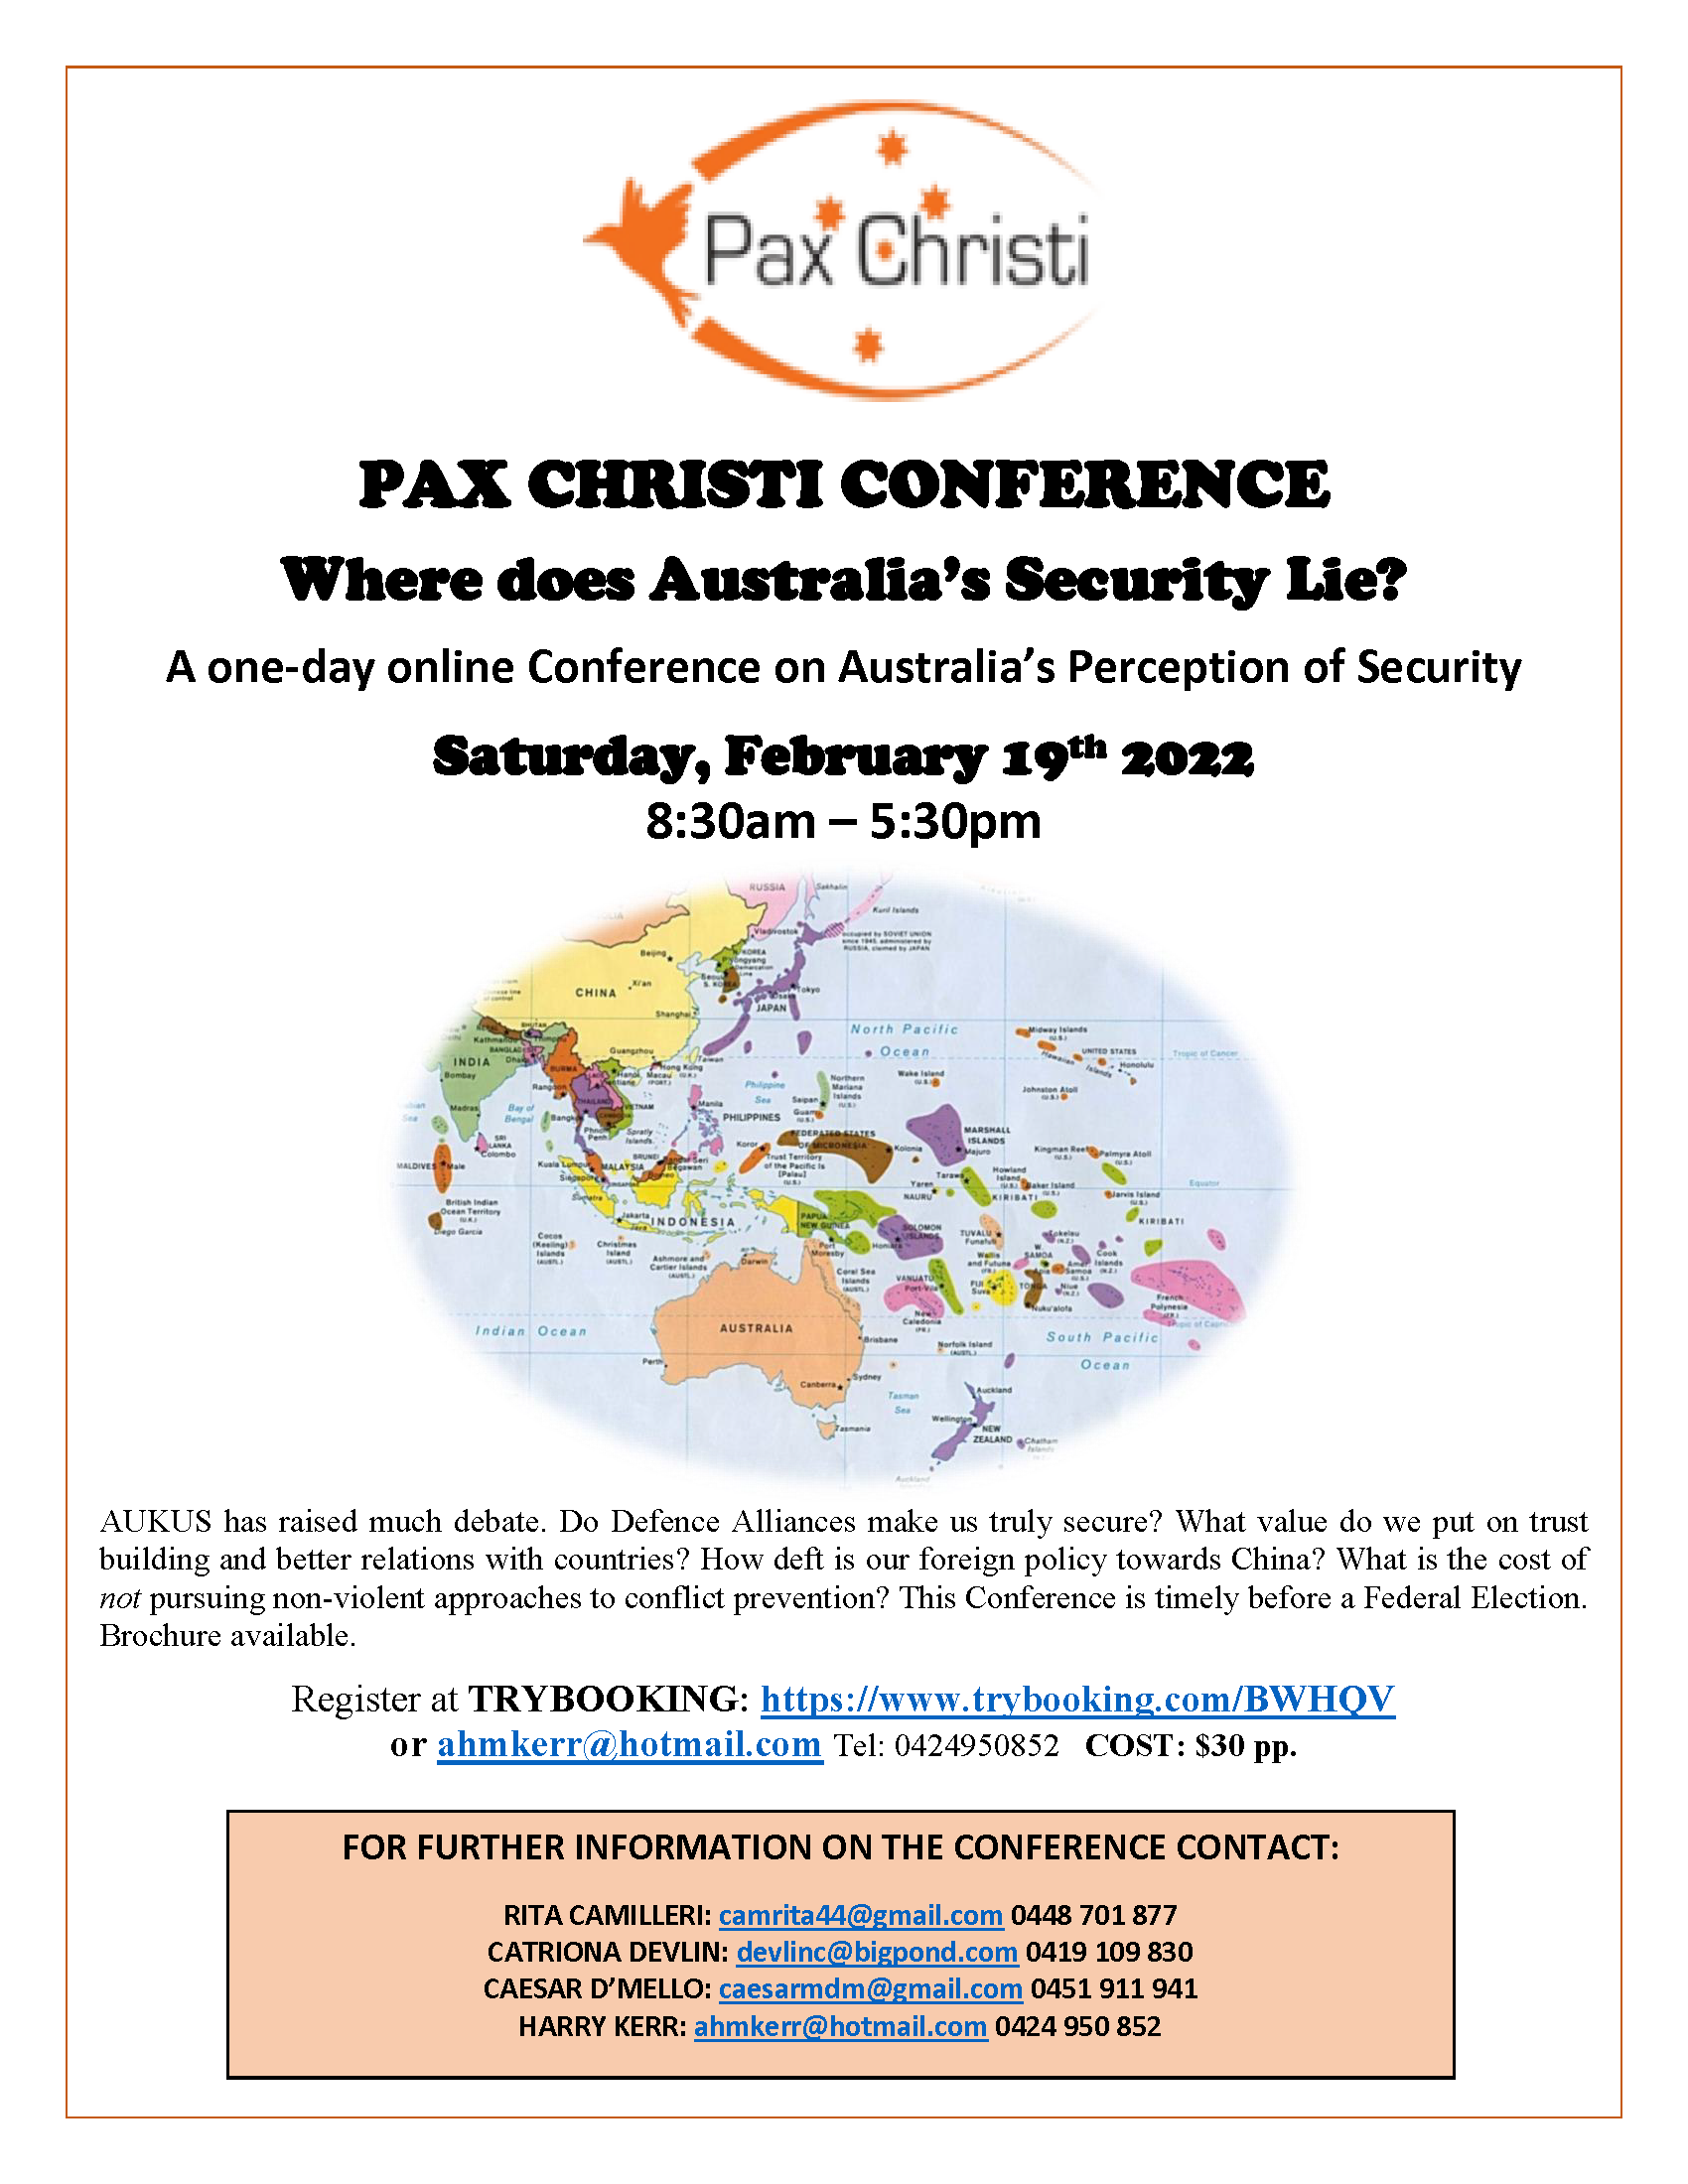 Where does Australia’s Security Lie? Pax Christi Australia Conference